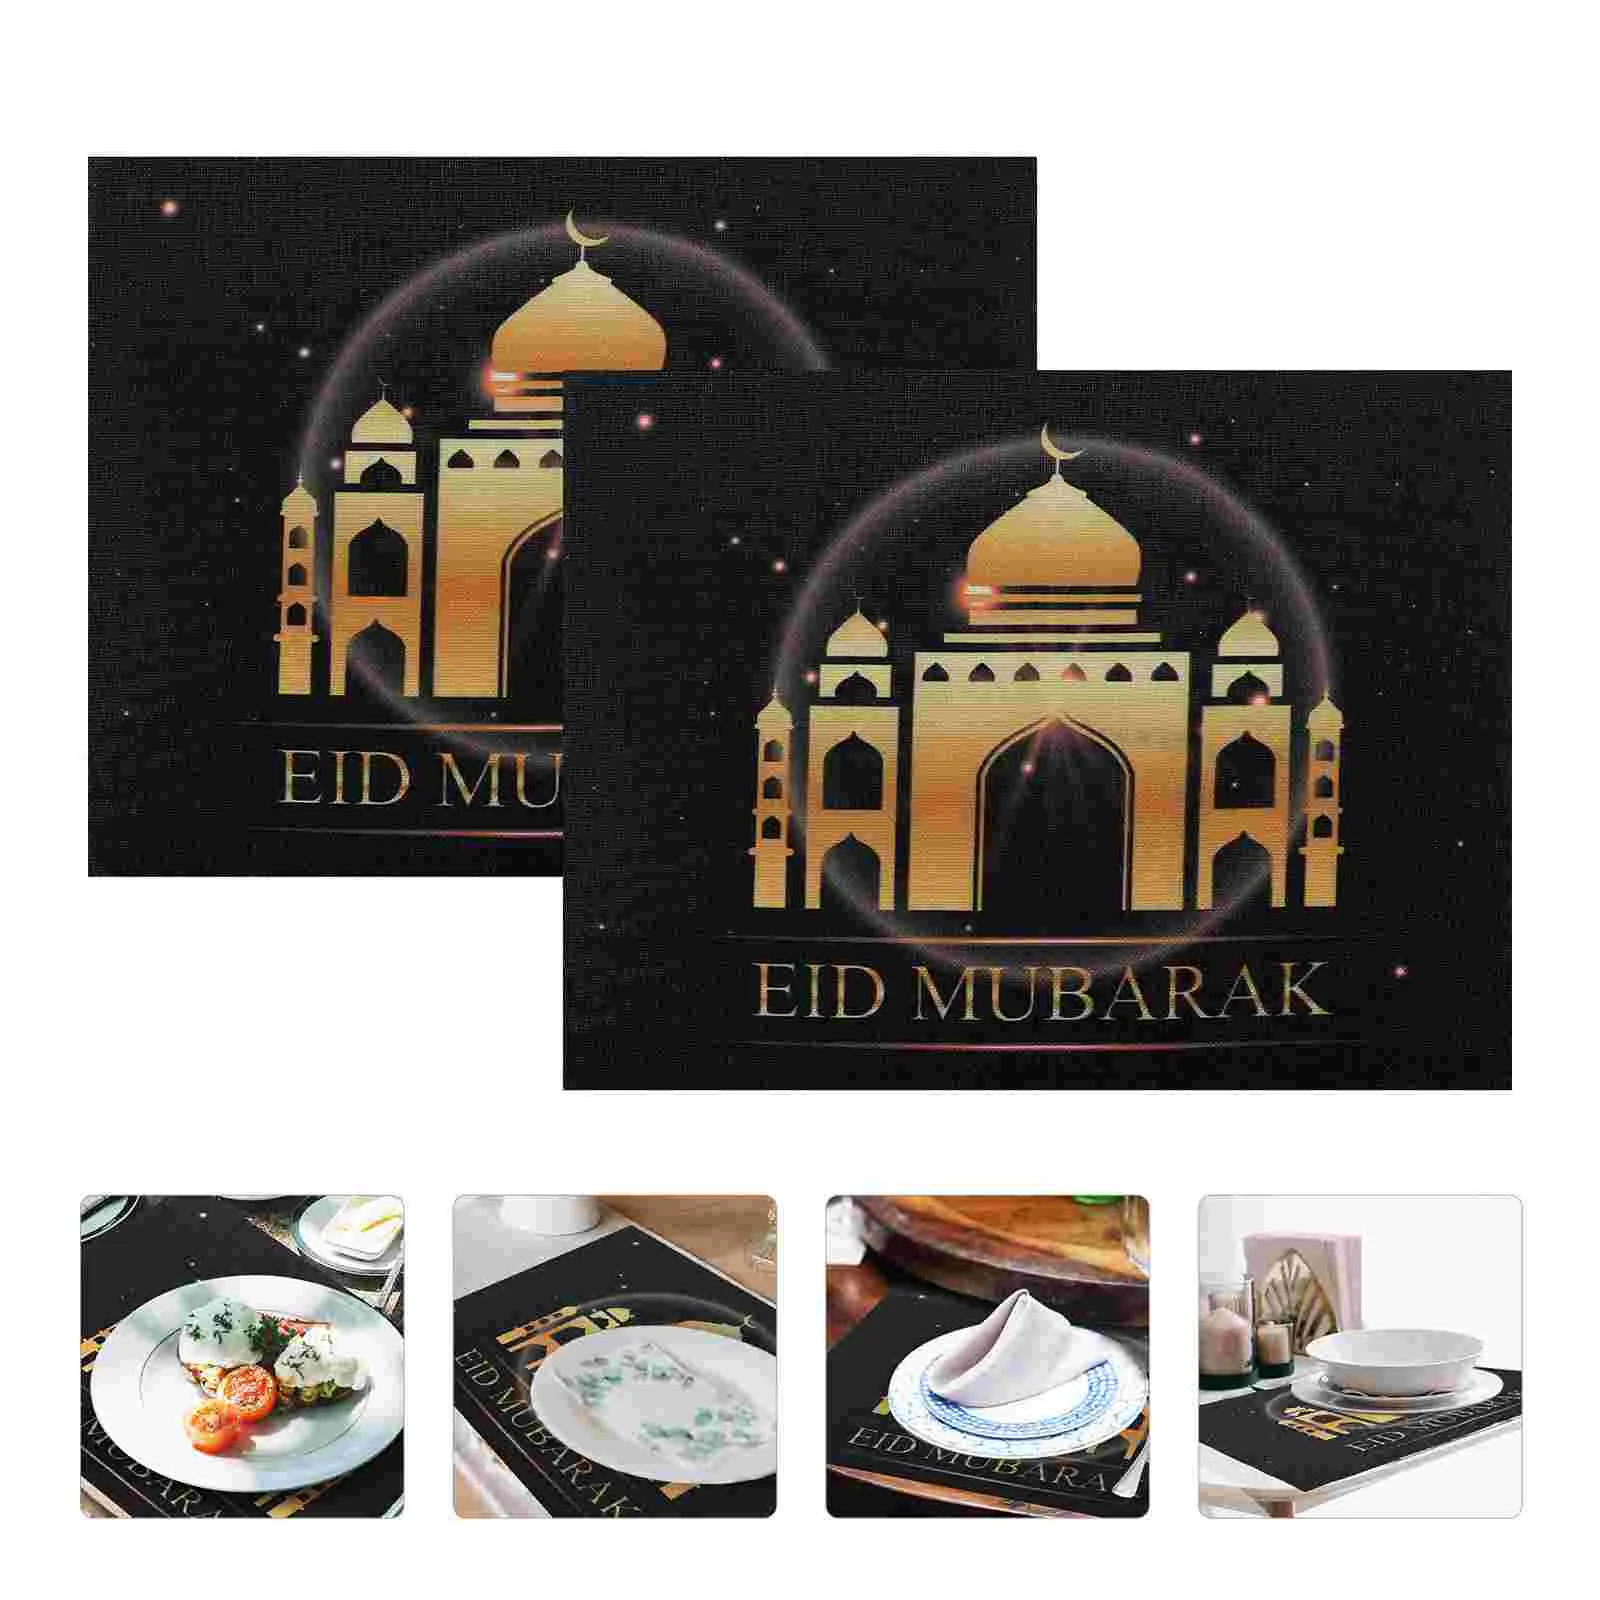 

Table Mubarak Eid Placemats Ramadan Islamic Mats Runner Coasters Runners Decoration Muslim Coaster Square Place Mat